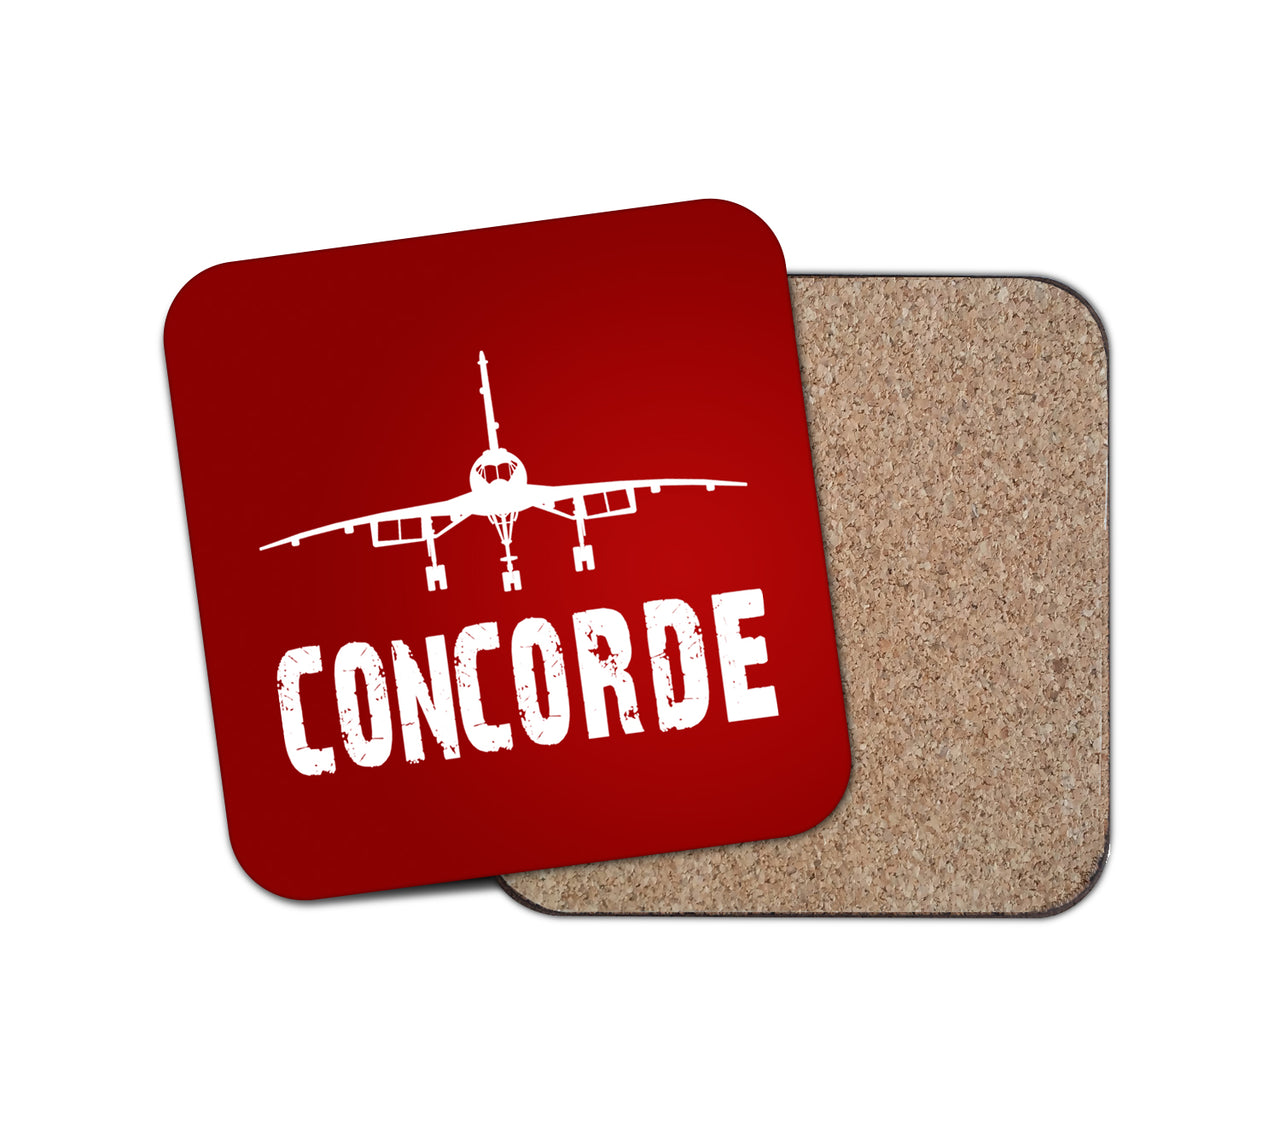 Concorde & Plane Designed Coasters